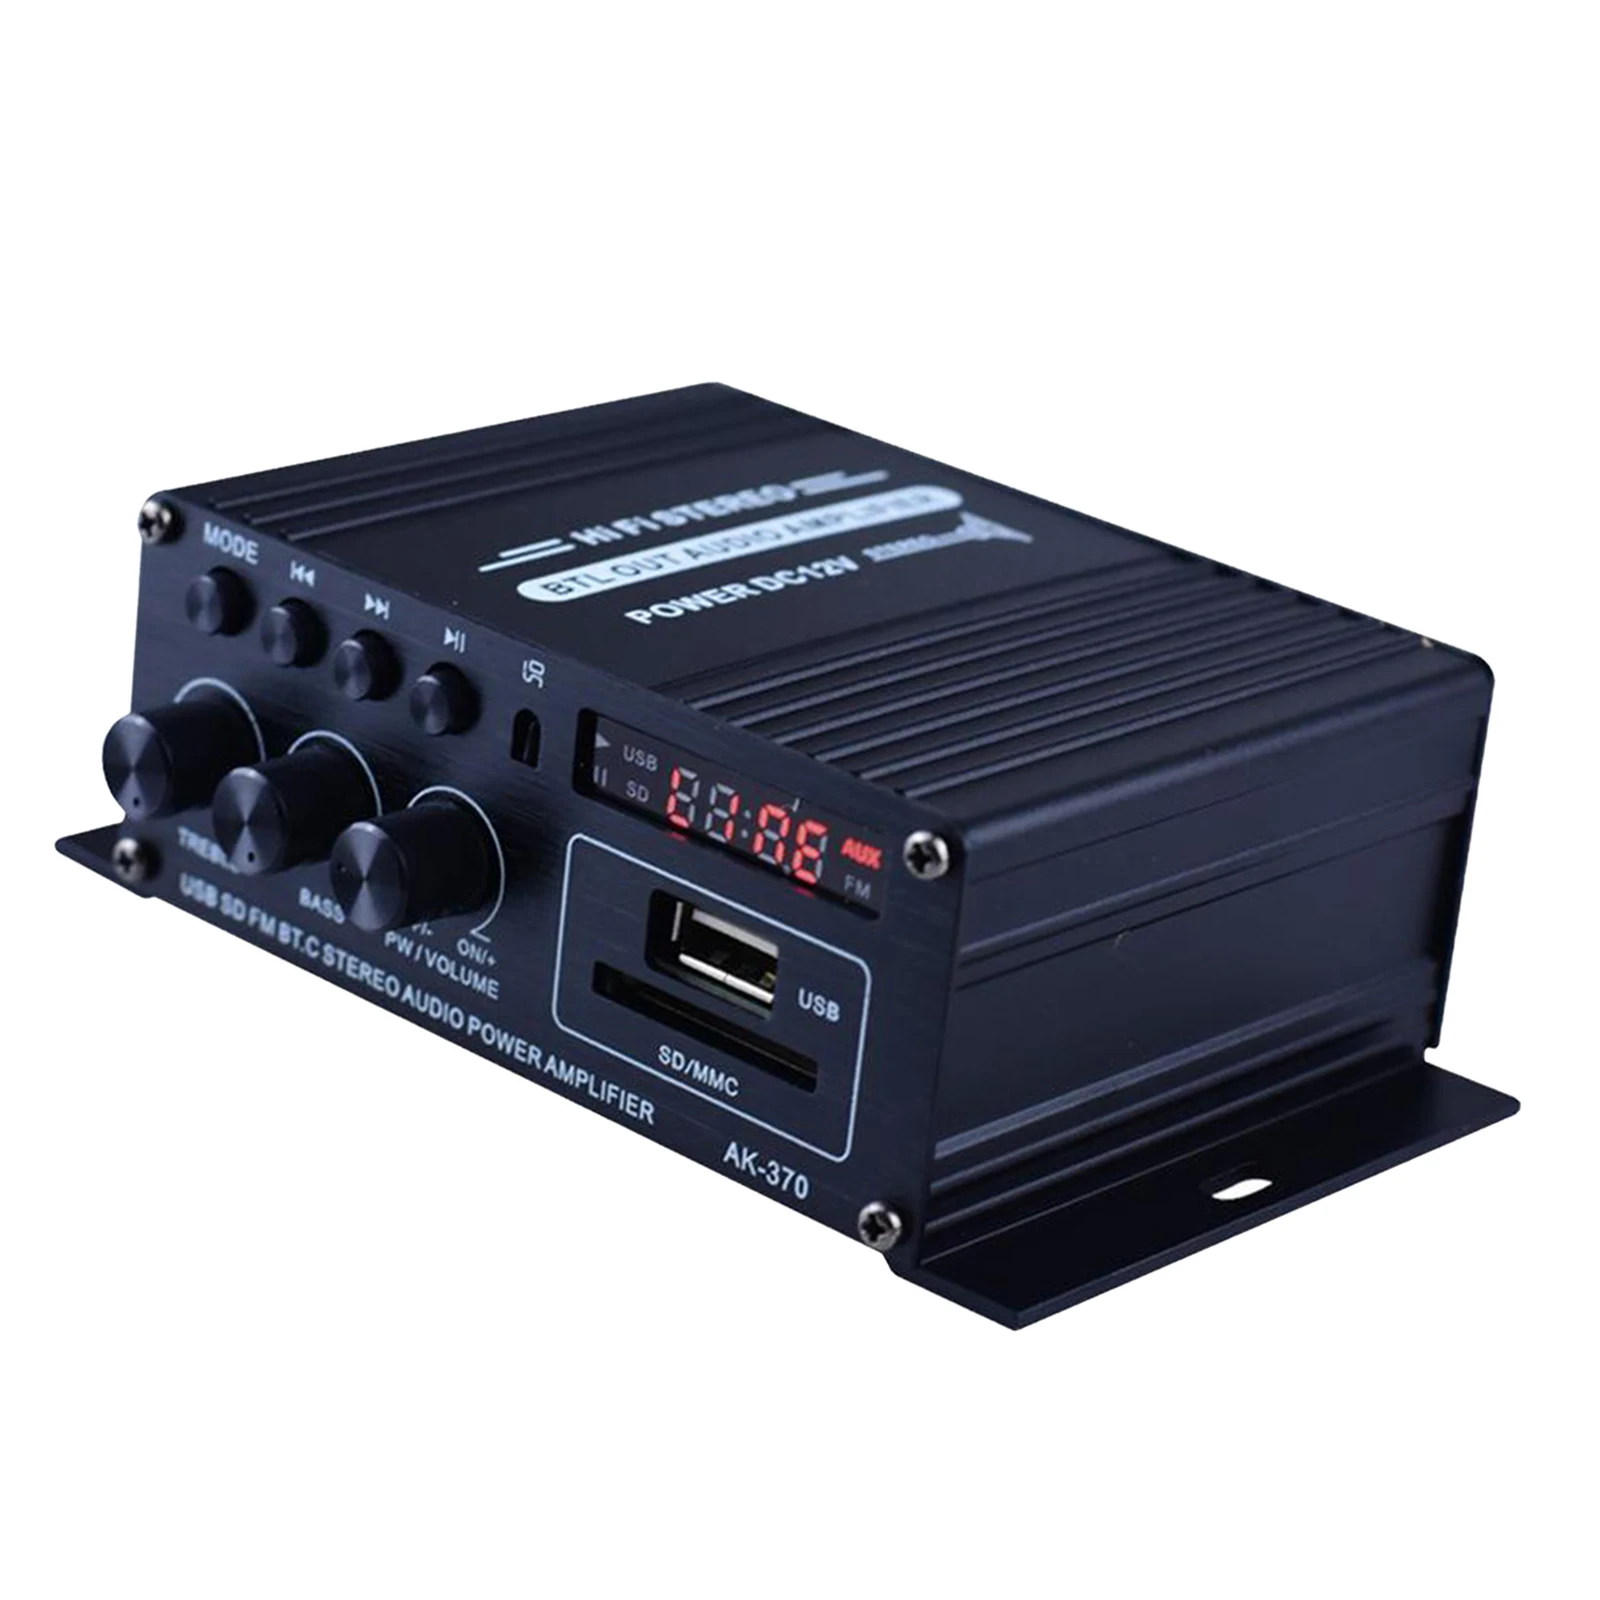 Bass & Treble Control Mini Audio Power Sound Amplifier Amp Bluetooth 12V